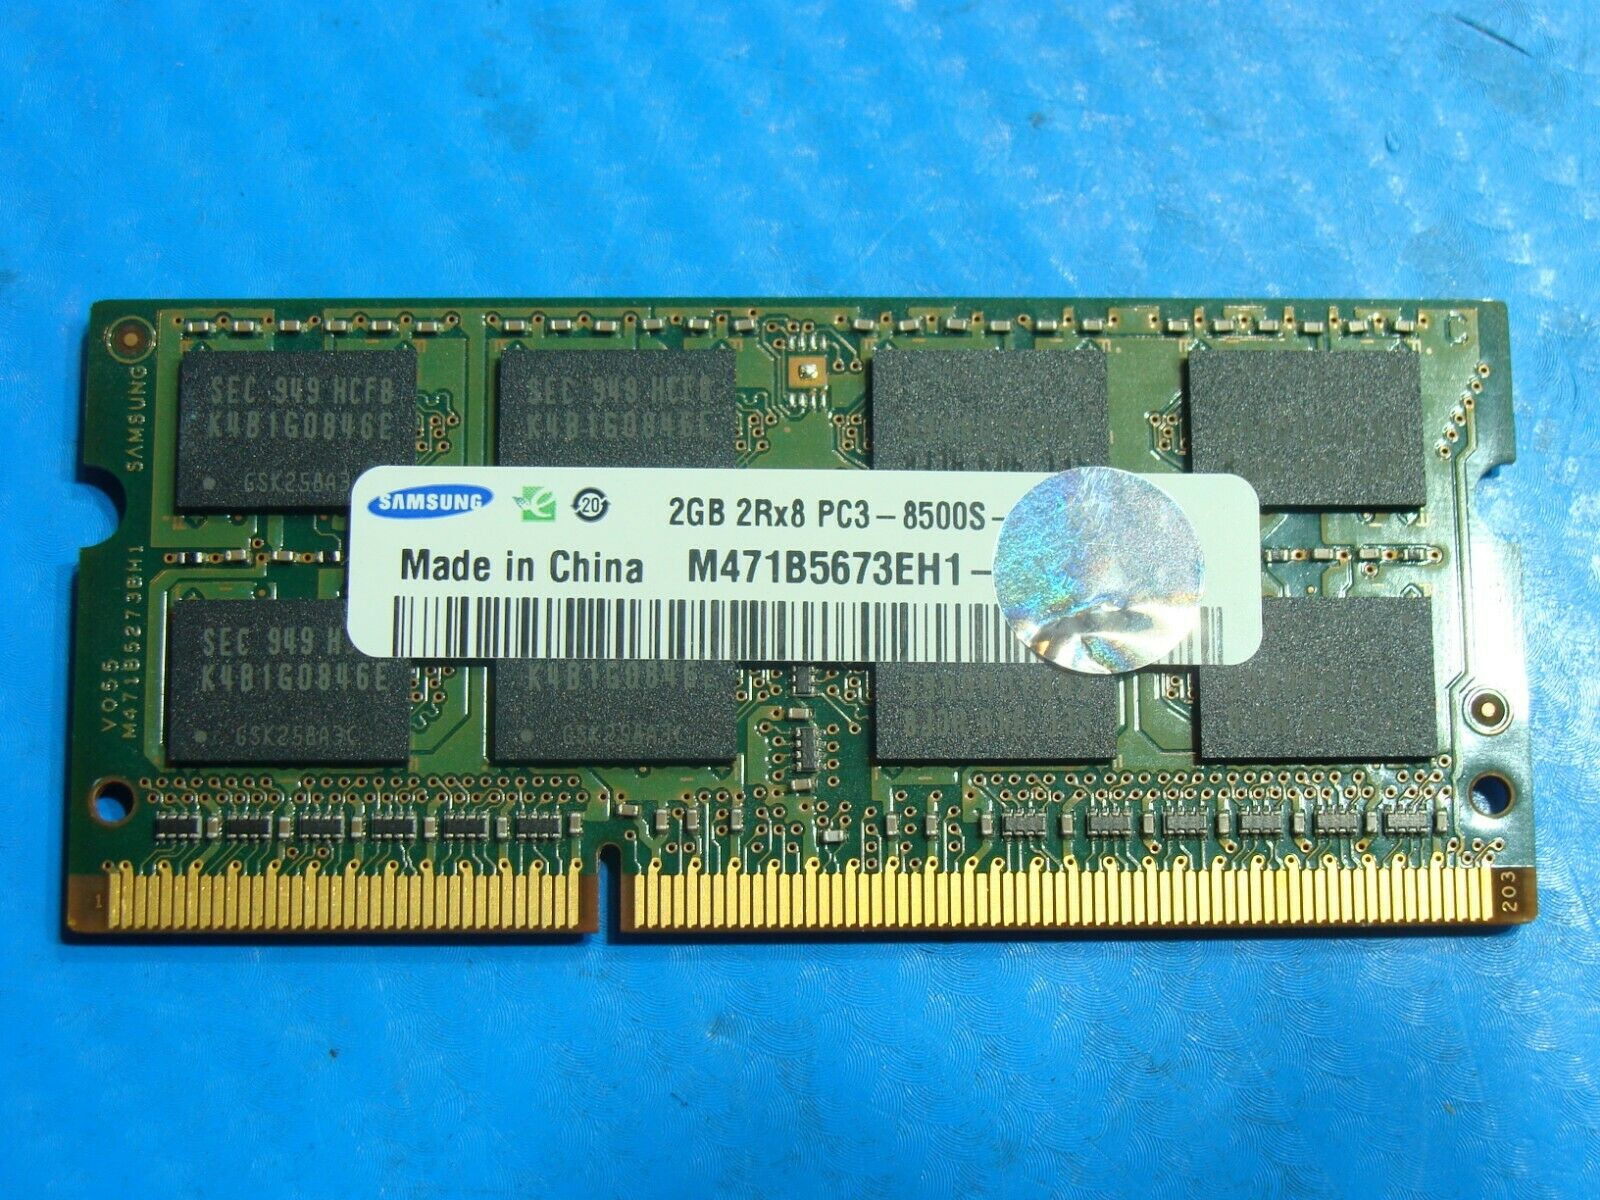 MacBook Pro A1278 Samsung 2GB Memory PC3-8500S-07-10-F2 M471B5673EH1-CF8 - Laptop Parts - Buy Authentic Computer Parts - Top Seller Ebay